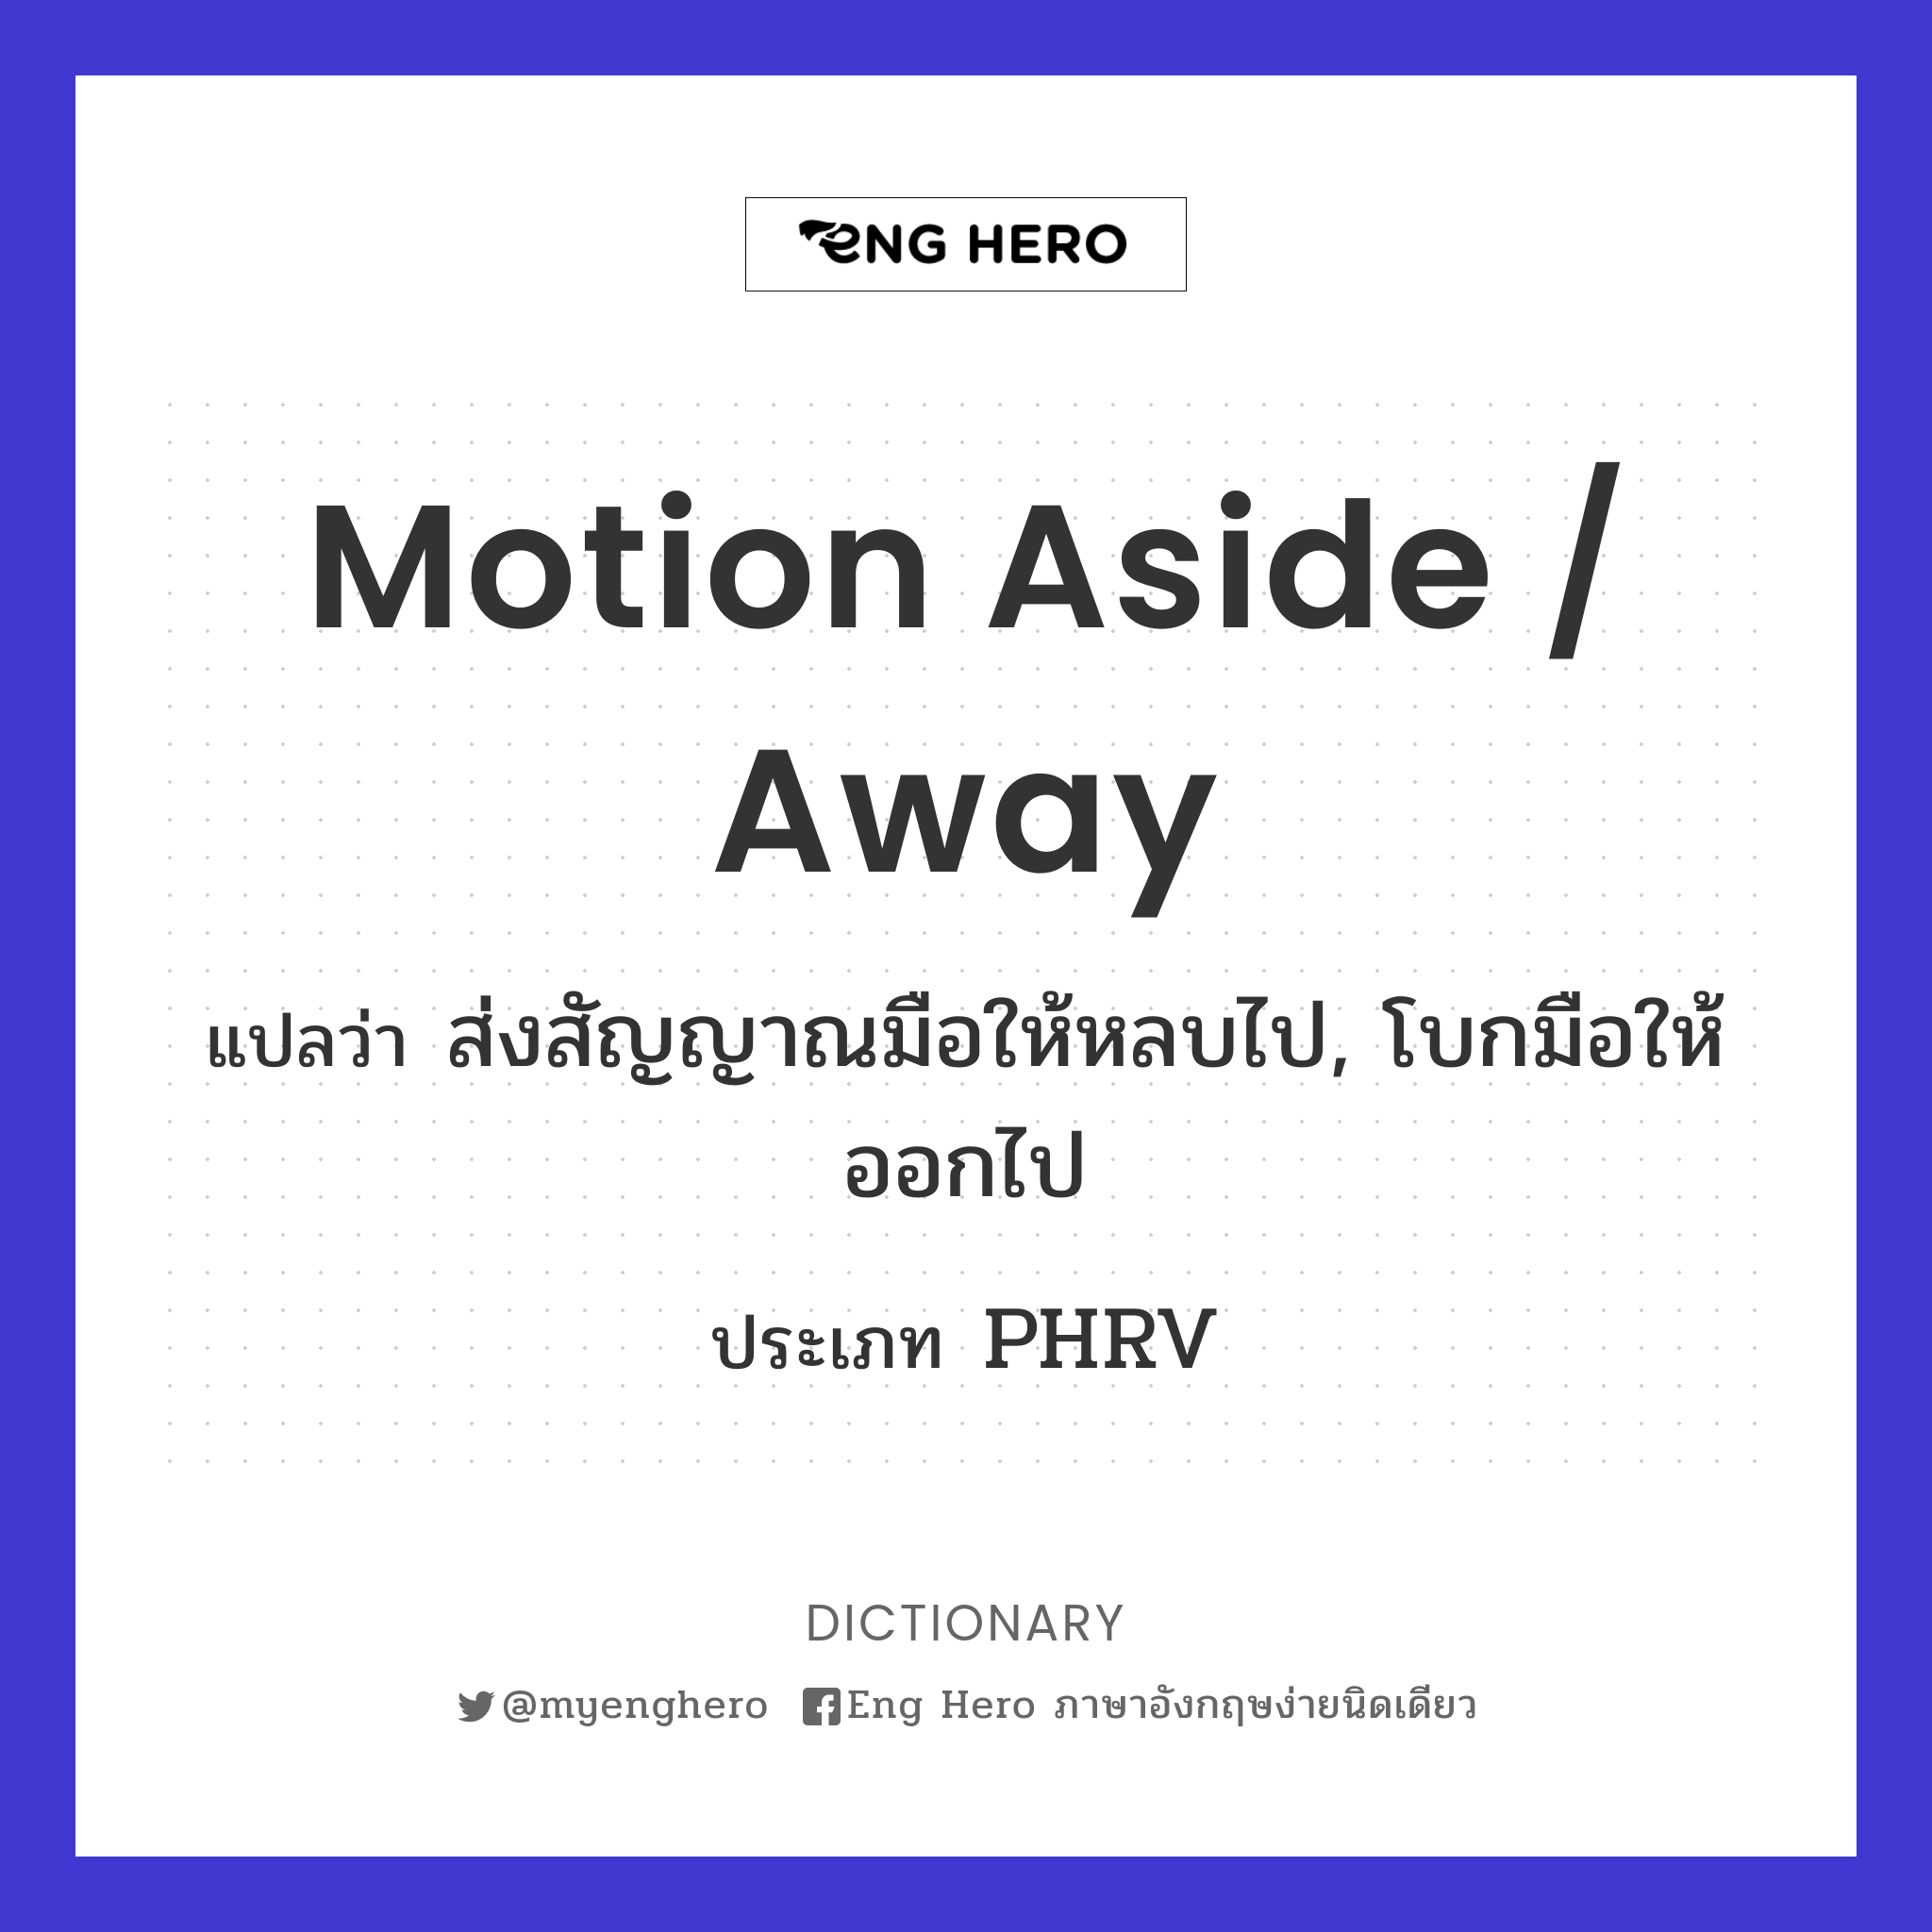 motion aside / away